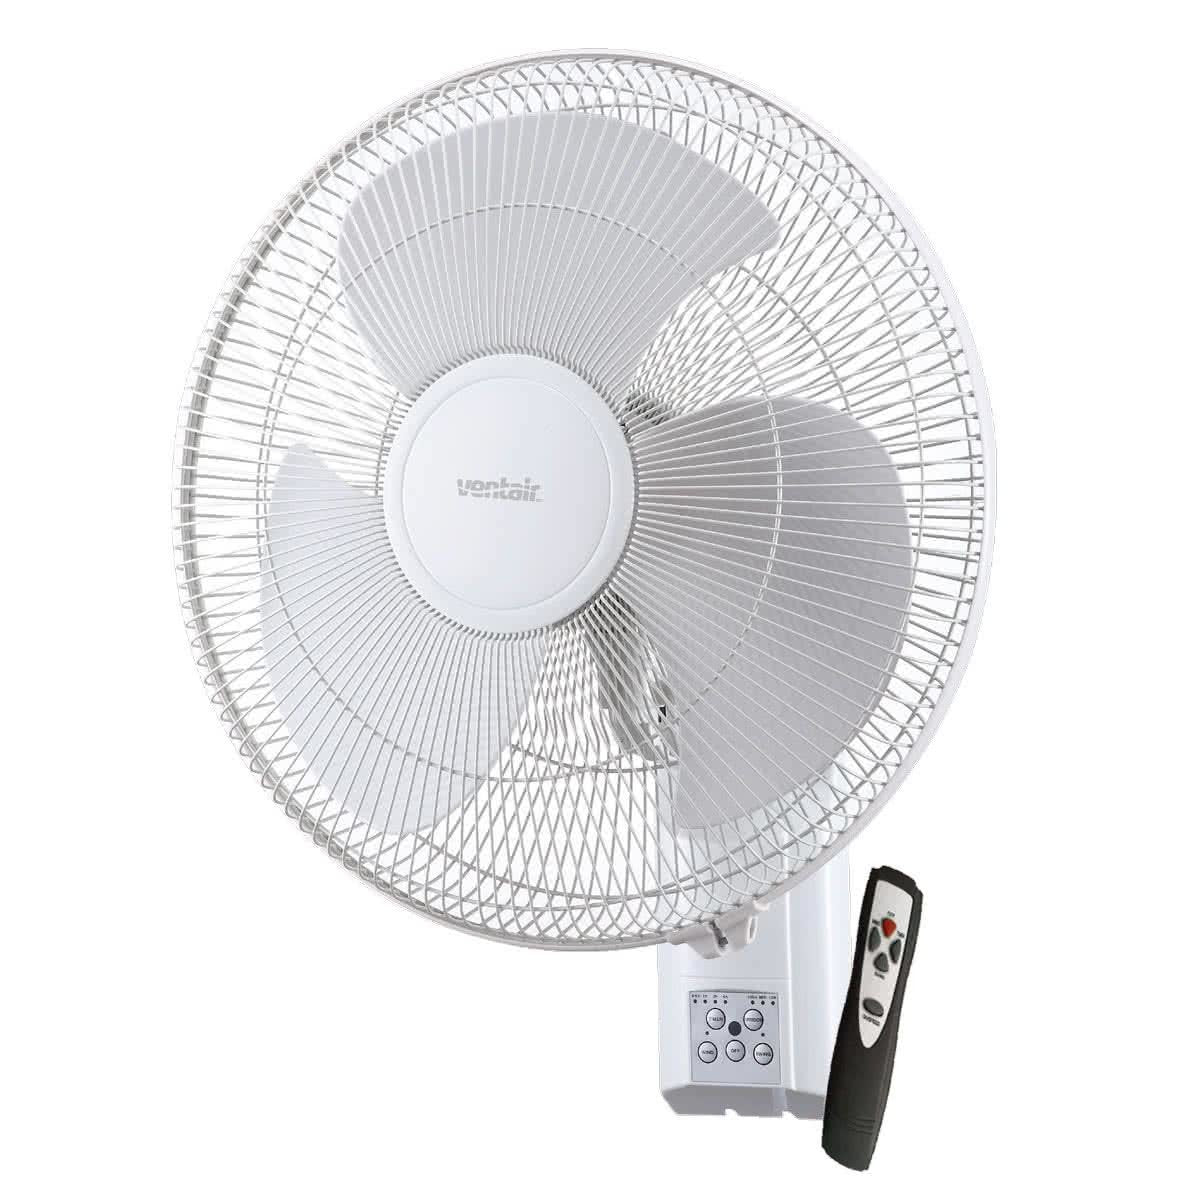 40cm Zephyr Ii Oscillating Wall Fan With Remote